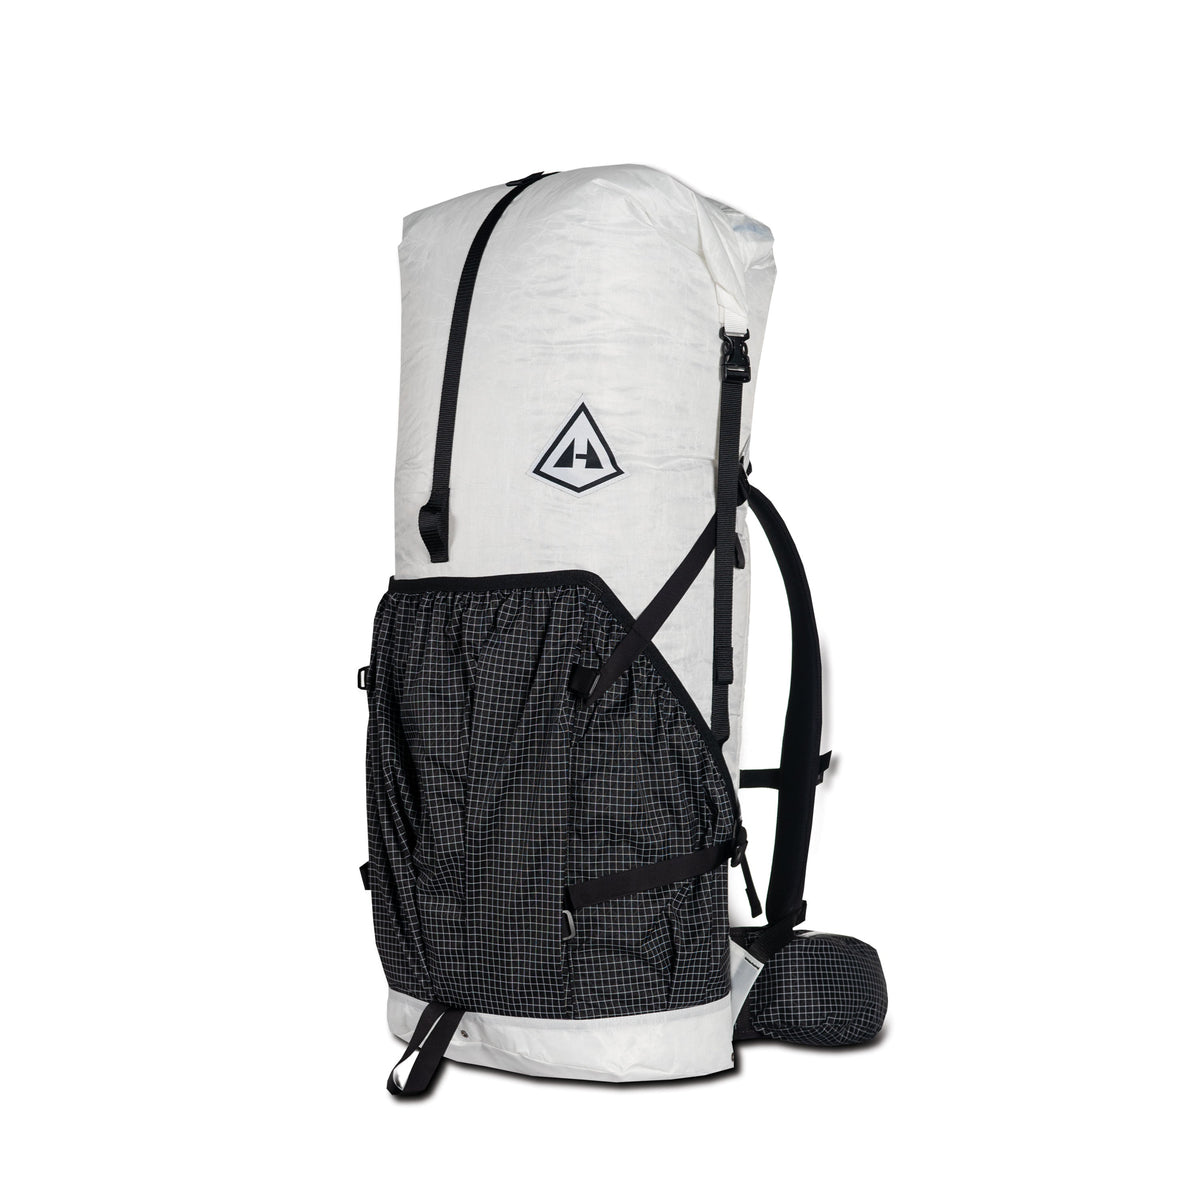 Off-White "Arrow" Mesh Backpack